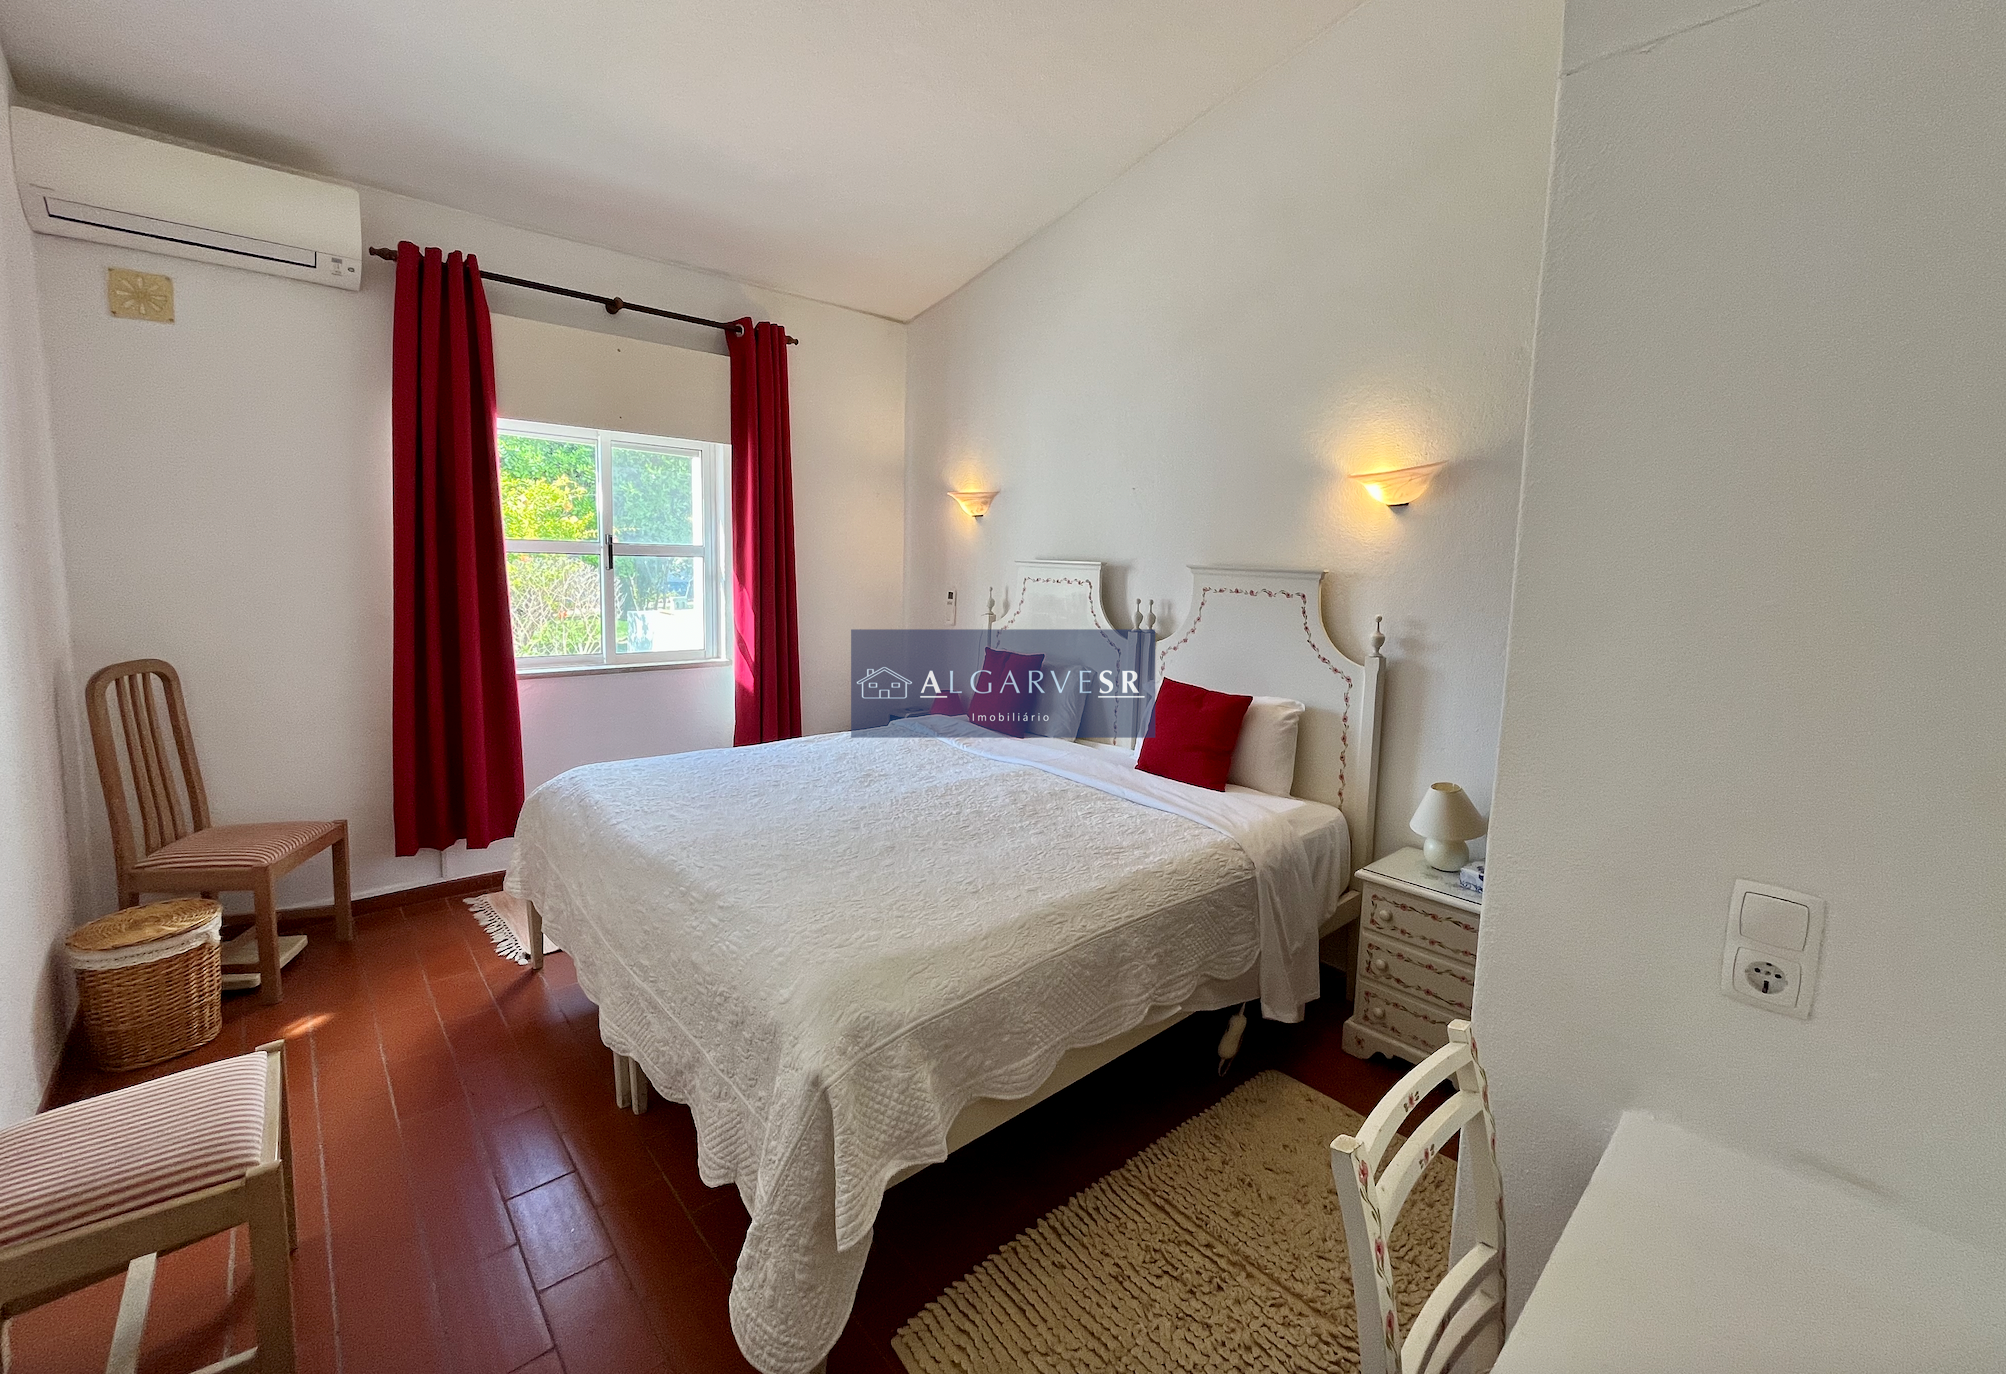 3 Bedroom Villa, Rocha Brava, Carvoeiro - 25% Share